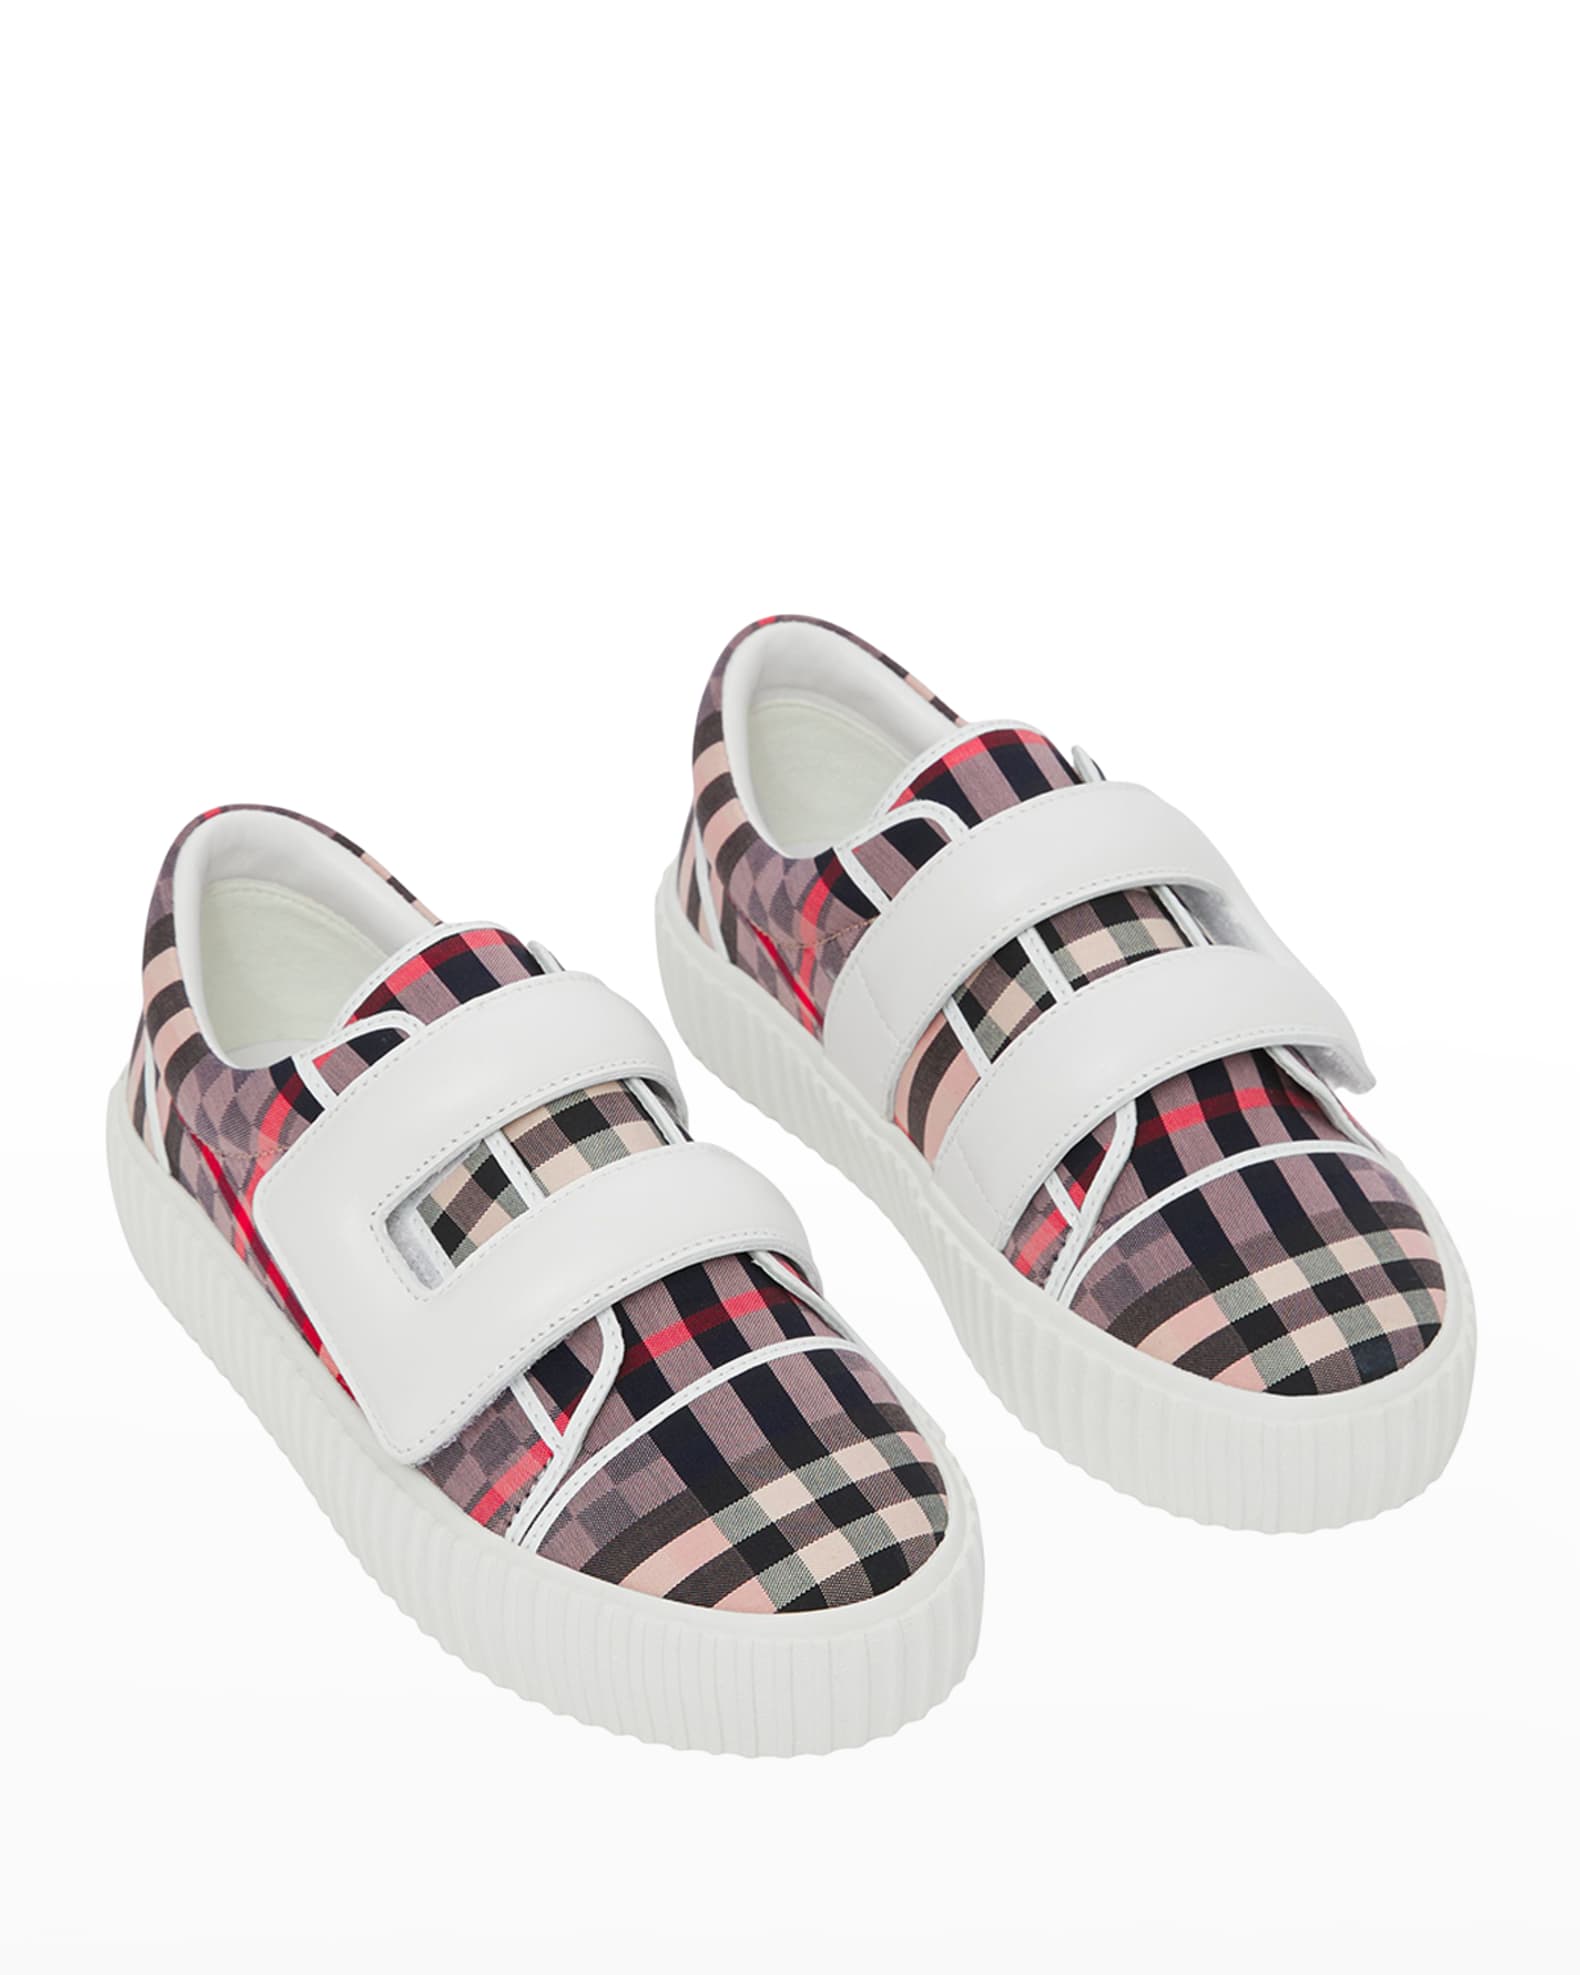 Burberry Girl's Mark Check Platform Sneakers, Toddler/Kids | Neiman Marcus